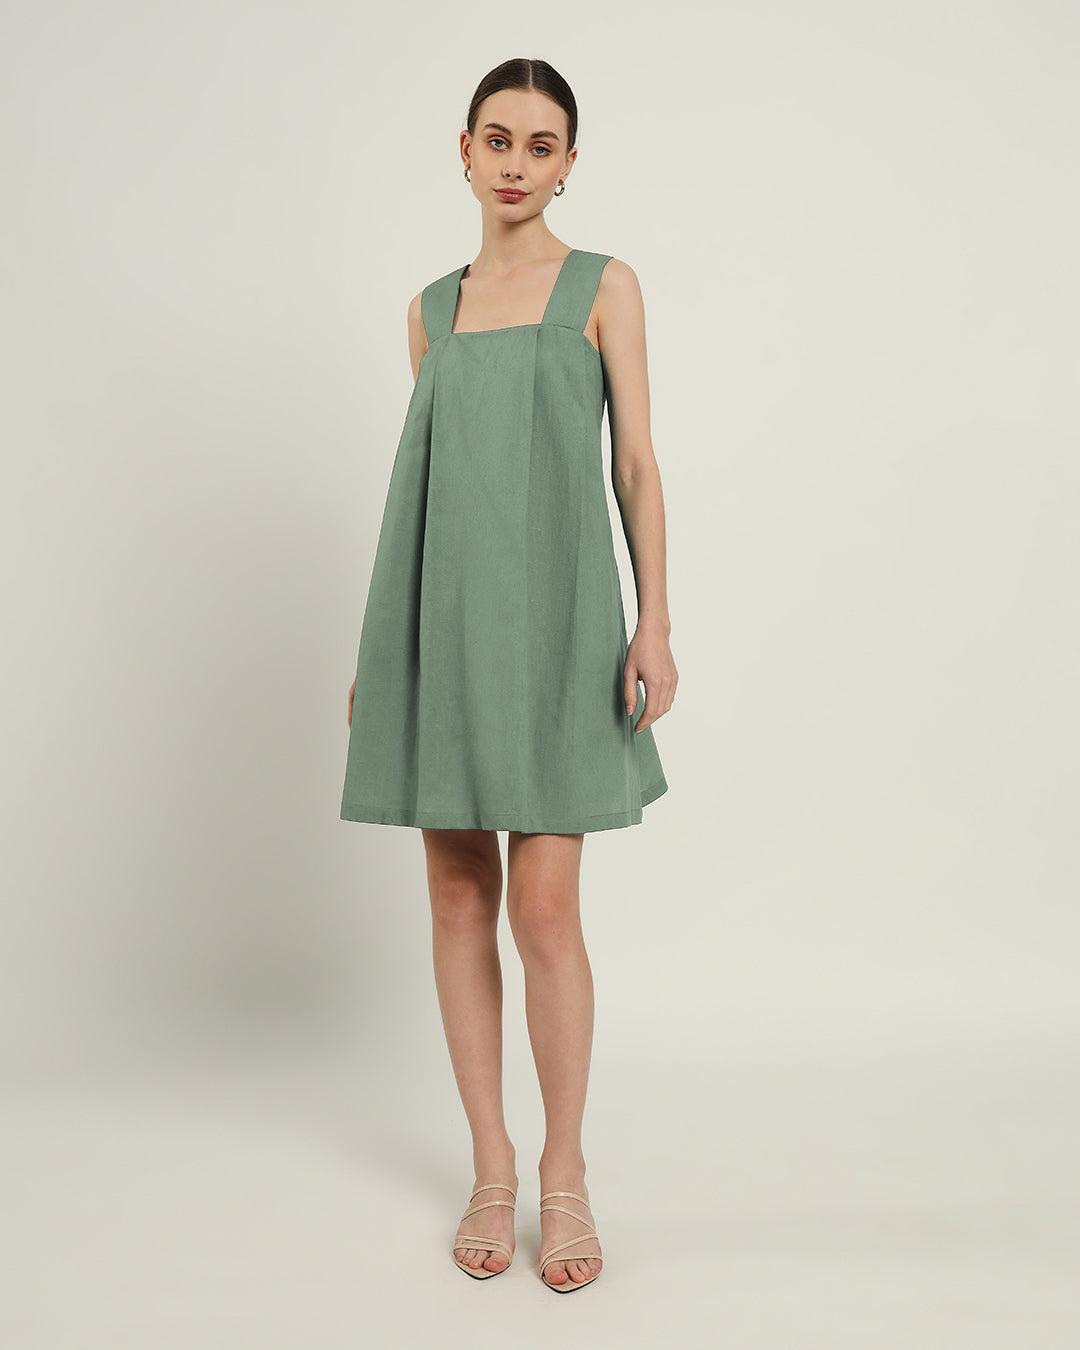 The Larissa Mint Cotton Dress